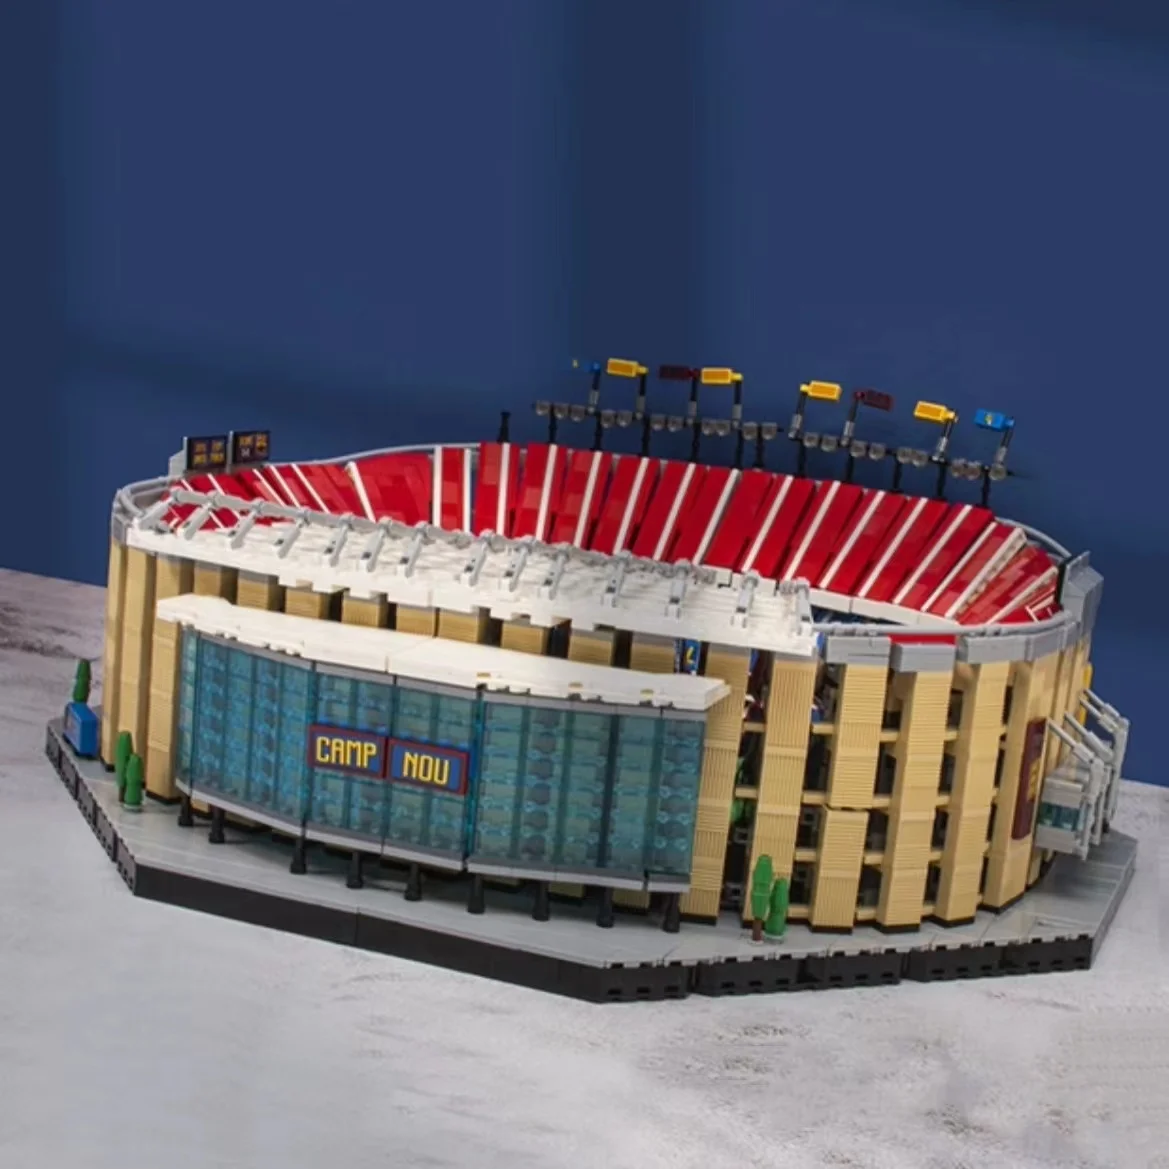 

NEW 10284 CAMP NOU STADIUM FC Barcelona Old Trafford Creatoring City Street View Model Building Blocks Bricks Toys Kids Gift